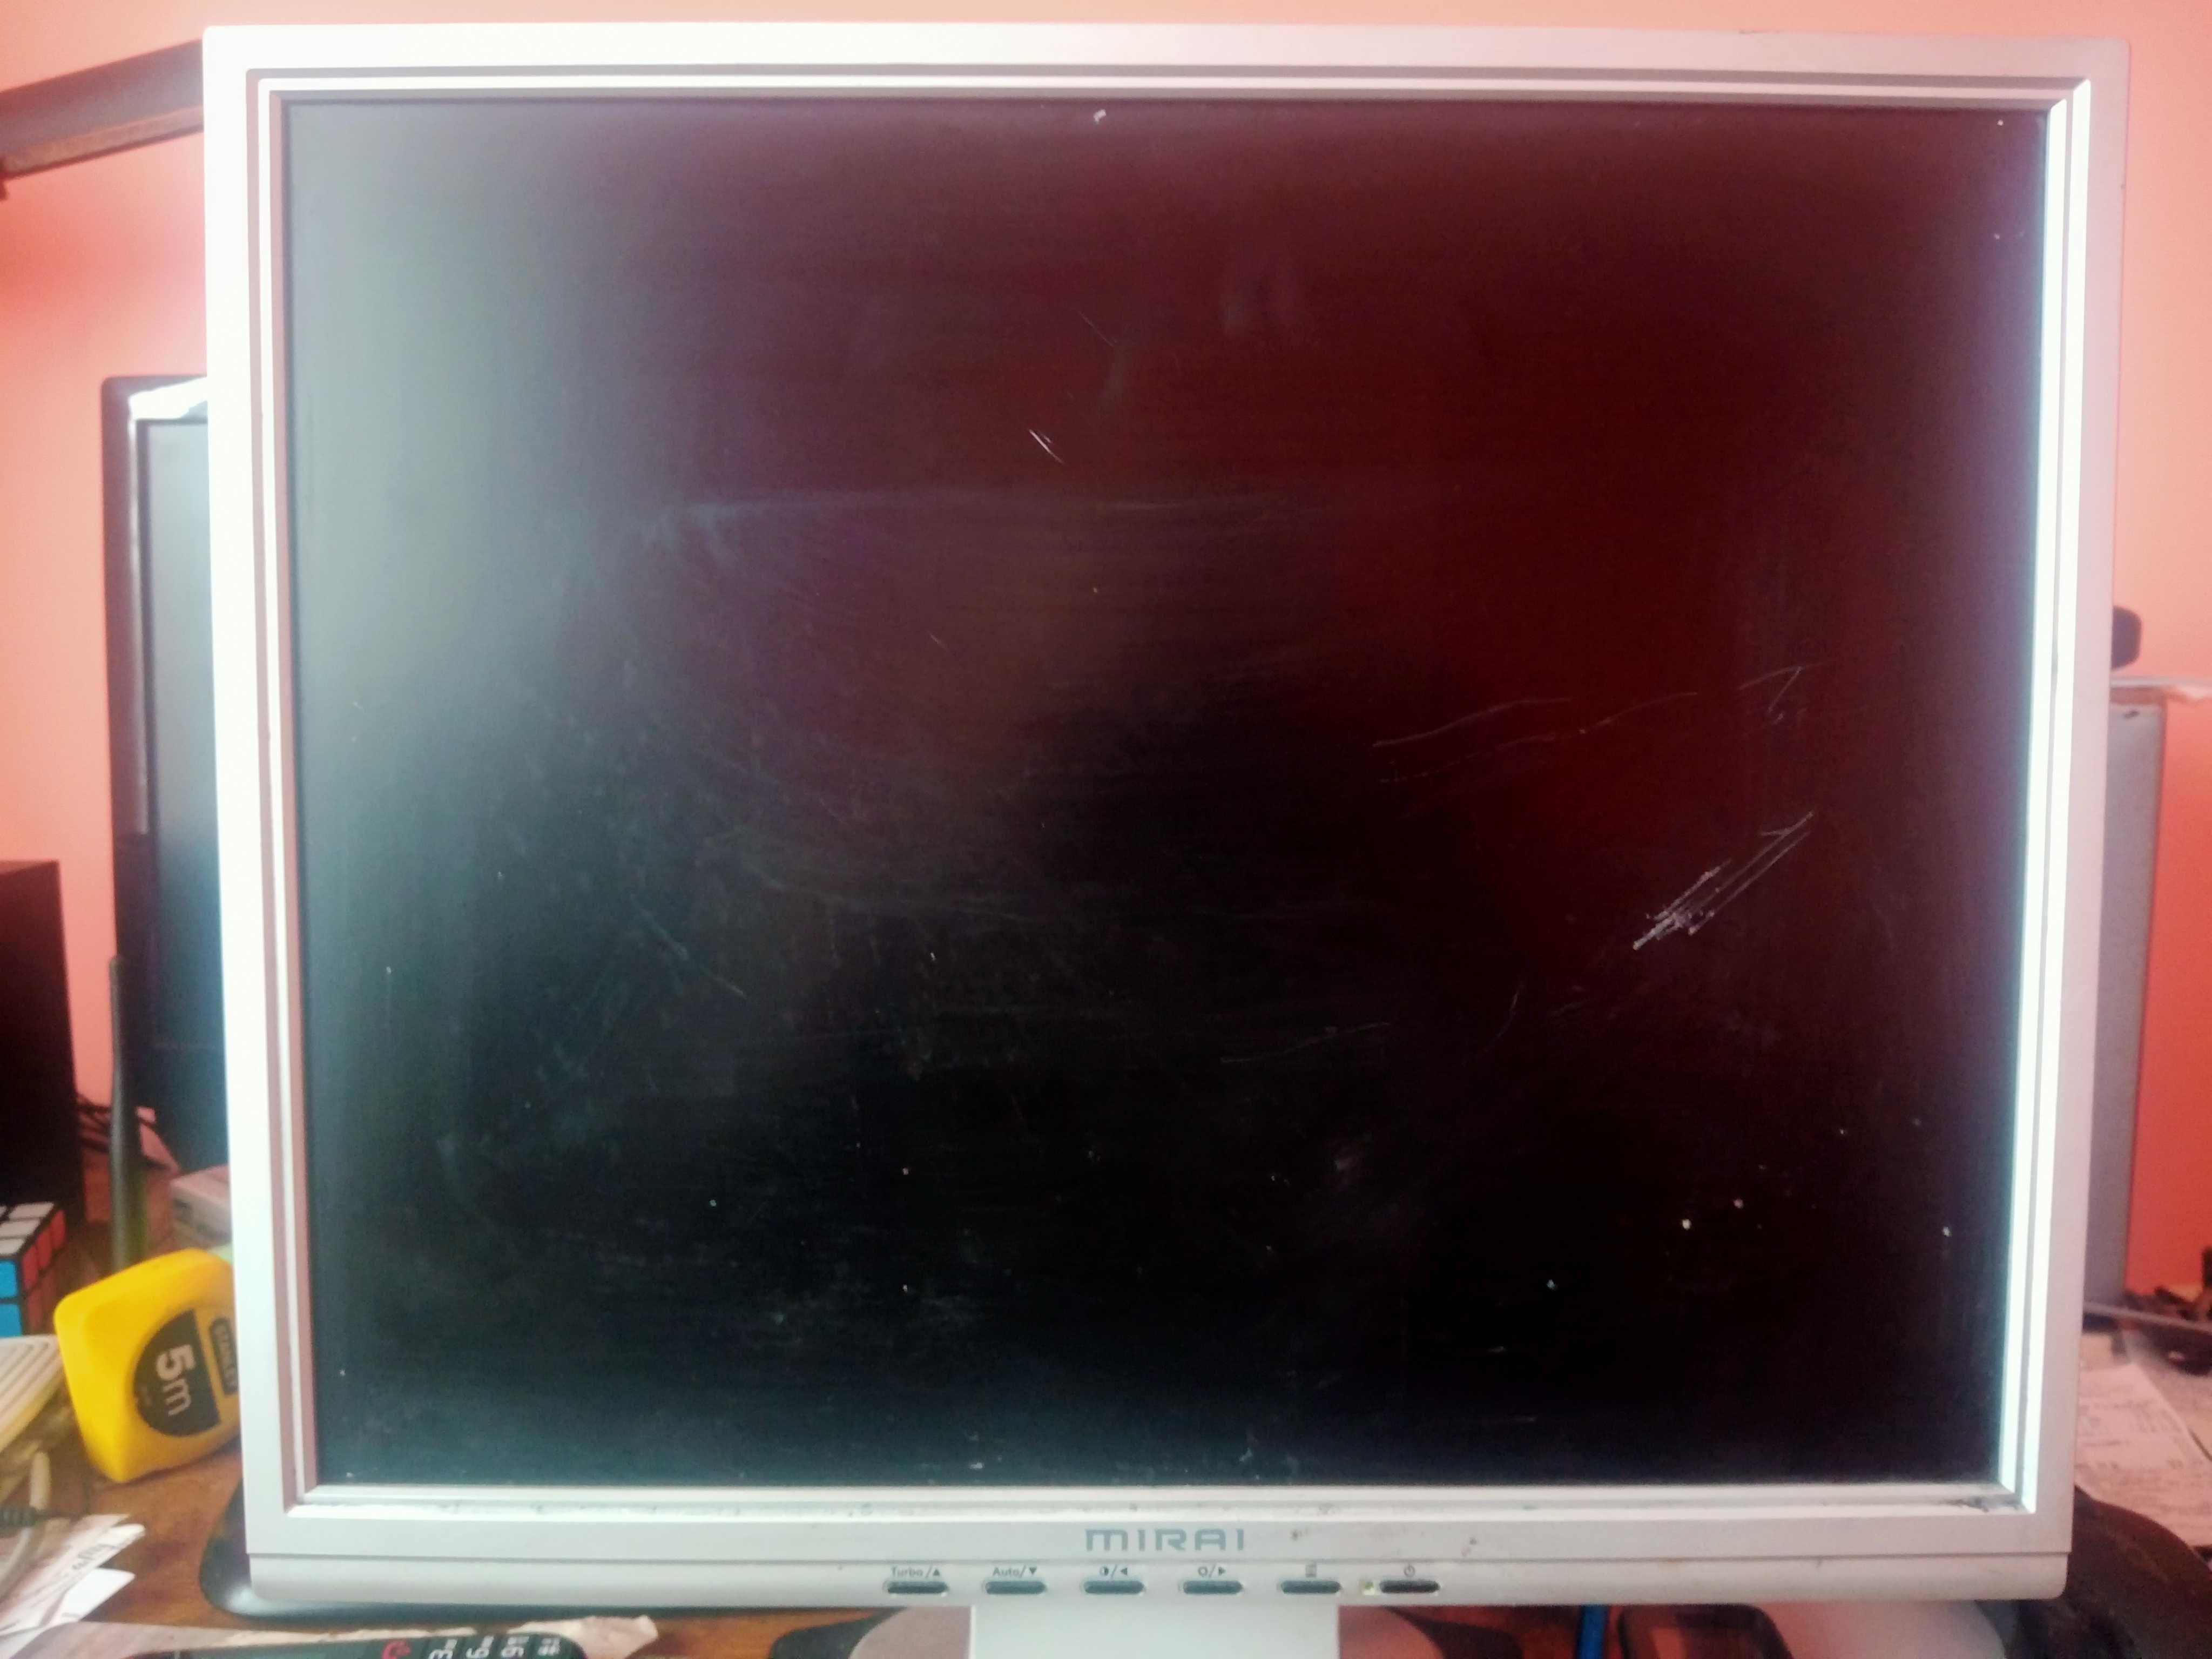 Monitor do komputera Mirai DML-519N100 Uszkodzony